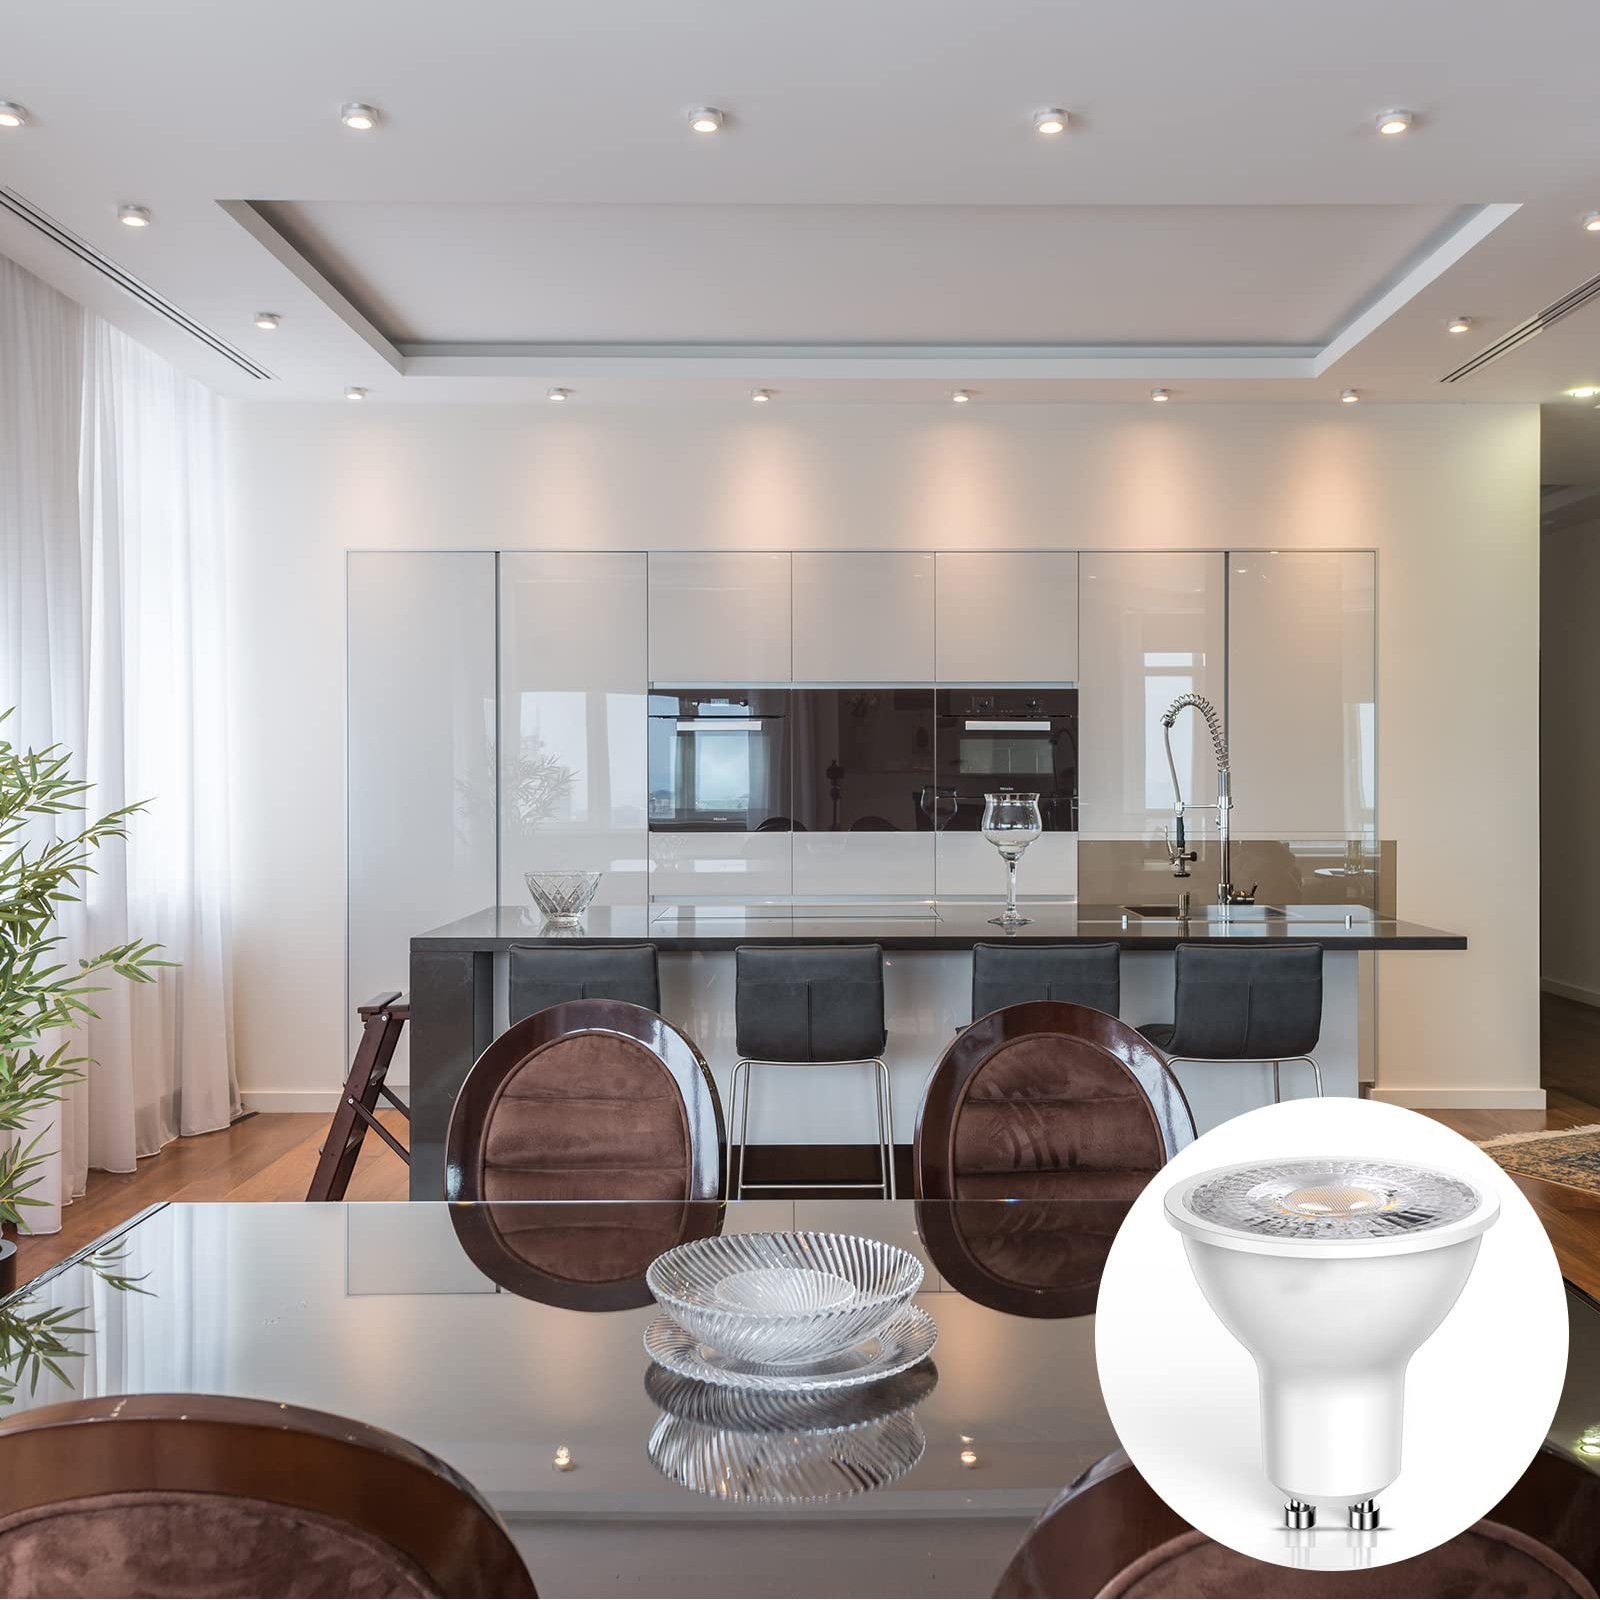 GU10 270°Spot LED-Leuchtmittel Lampe Weiß,LED-Leuchtmittel, Lumen LED-Glühbirne Reflektor MUPOO 7W,10St.LED Energiesparlampe Birne 6500K